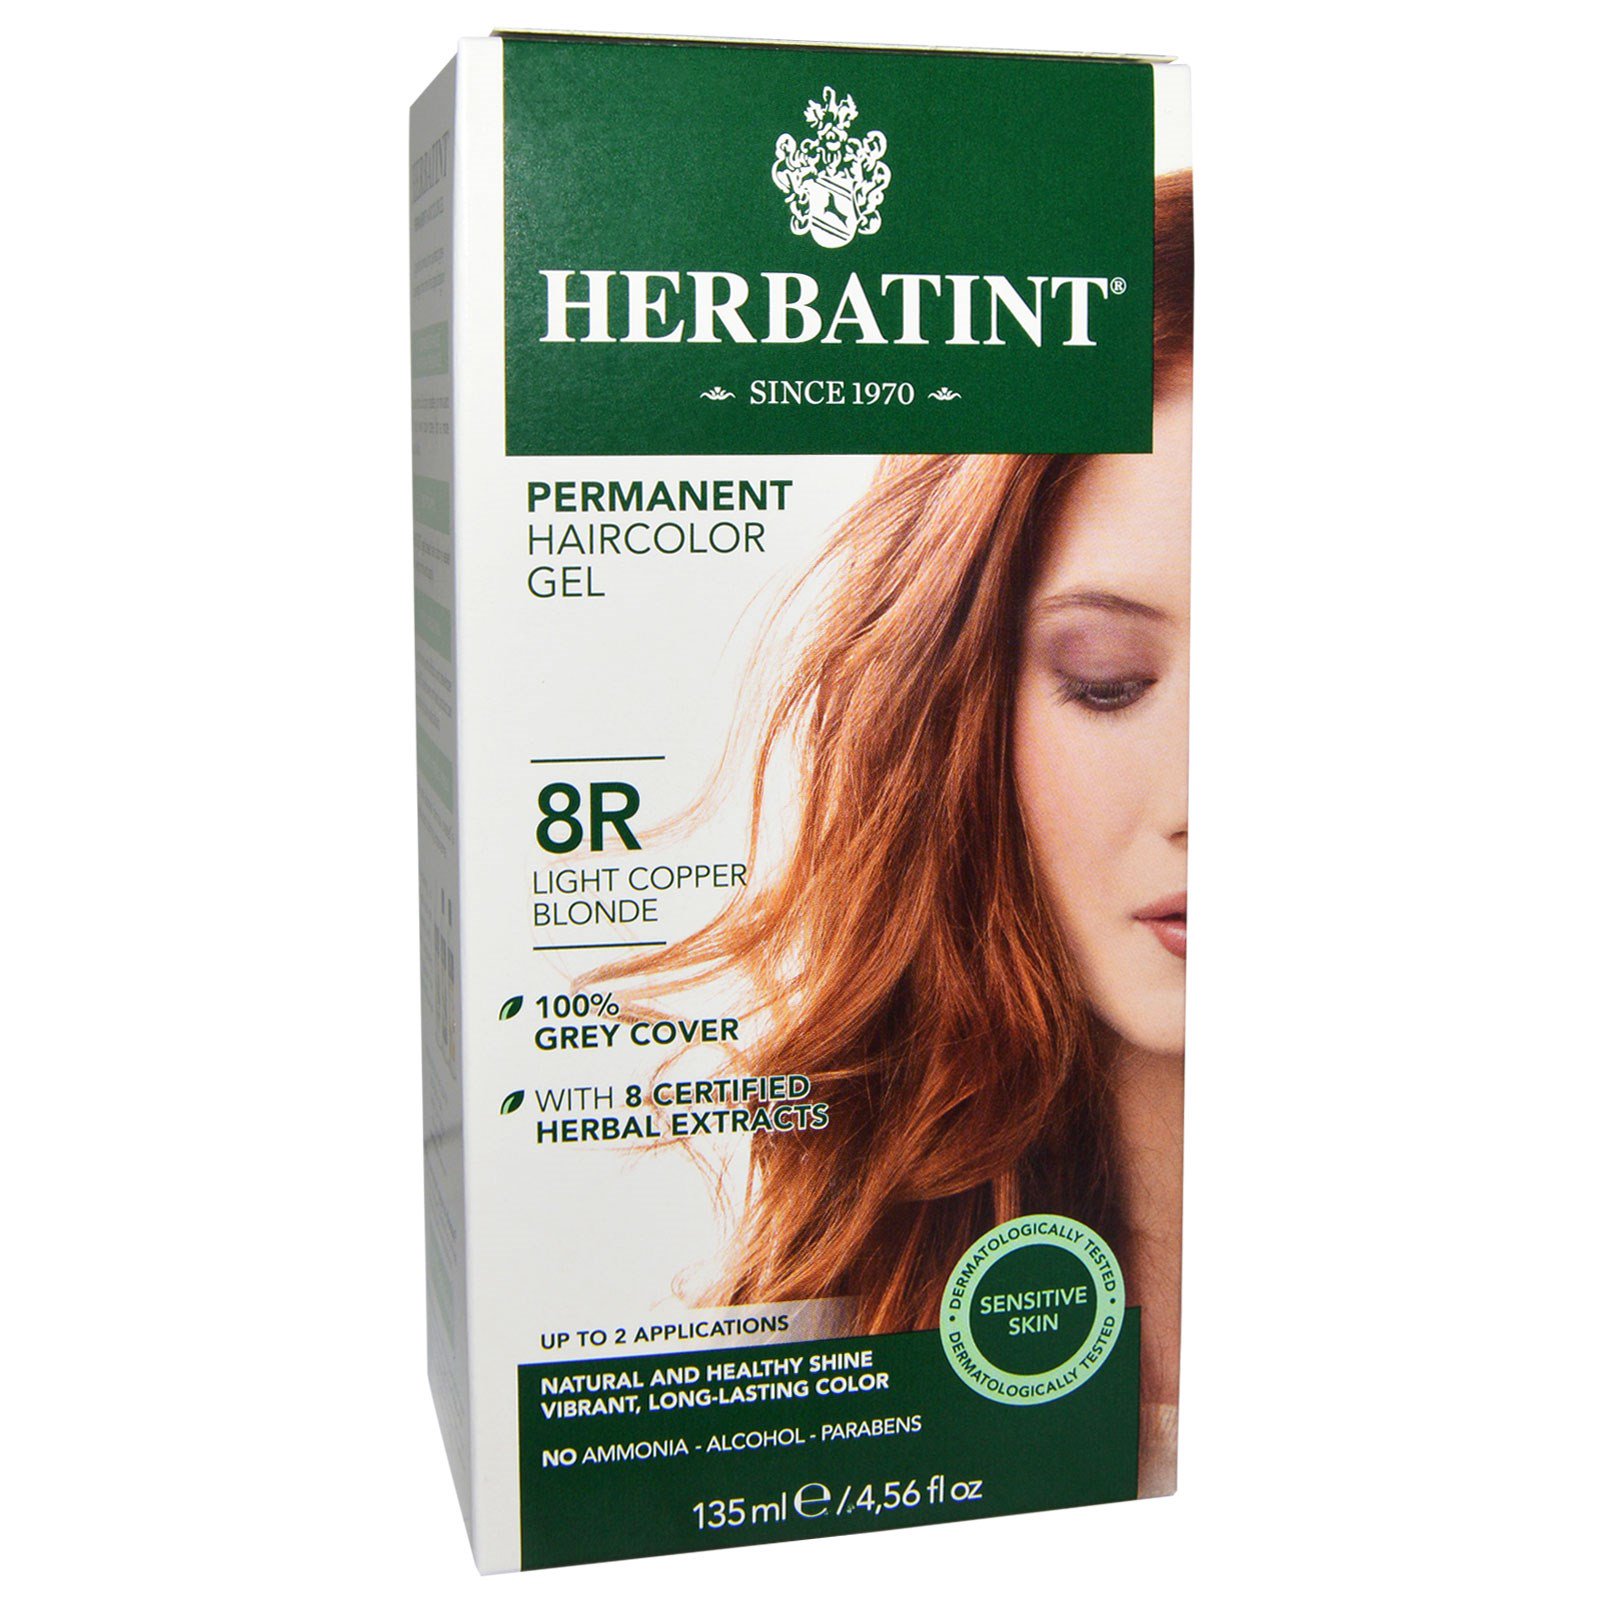 Herbatint Permanent Haircolor Gel 8r Light Copper Blonde 456 Fl Oz 